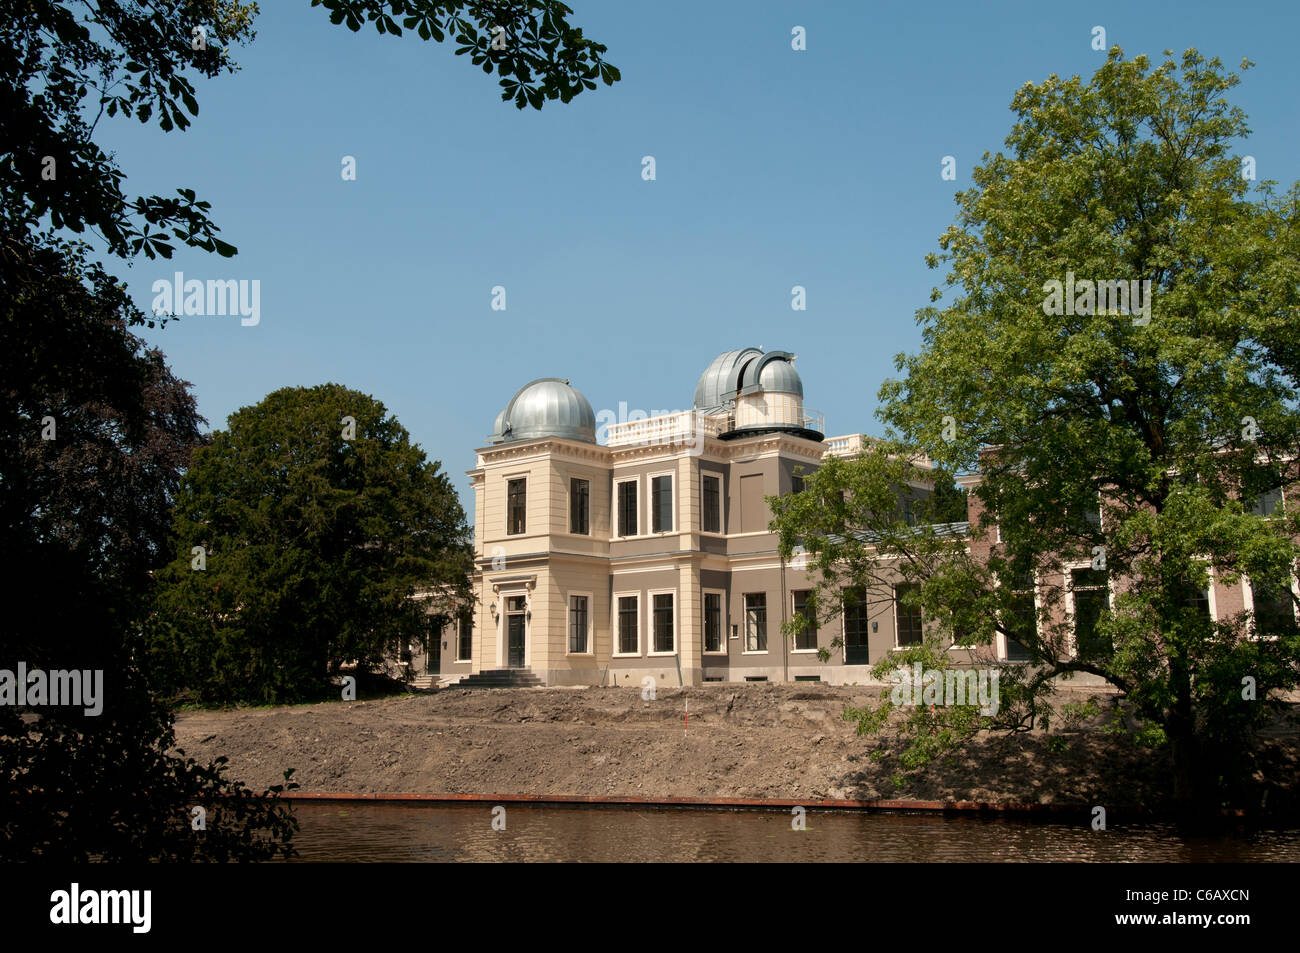 Sterrenwacht Leiden 1633 astronomical observatory  part of Old University 1575 (where Albert Einstein taught ) Netherlands Stock Photo